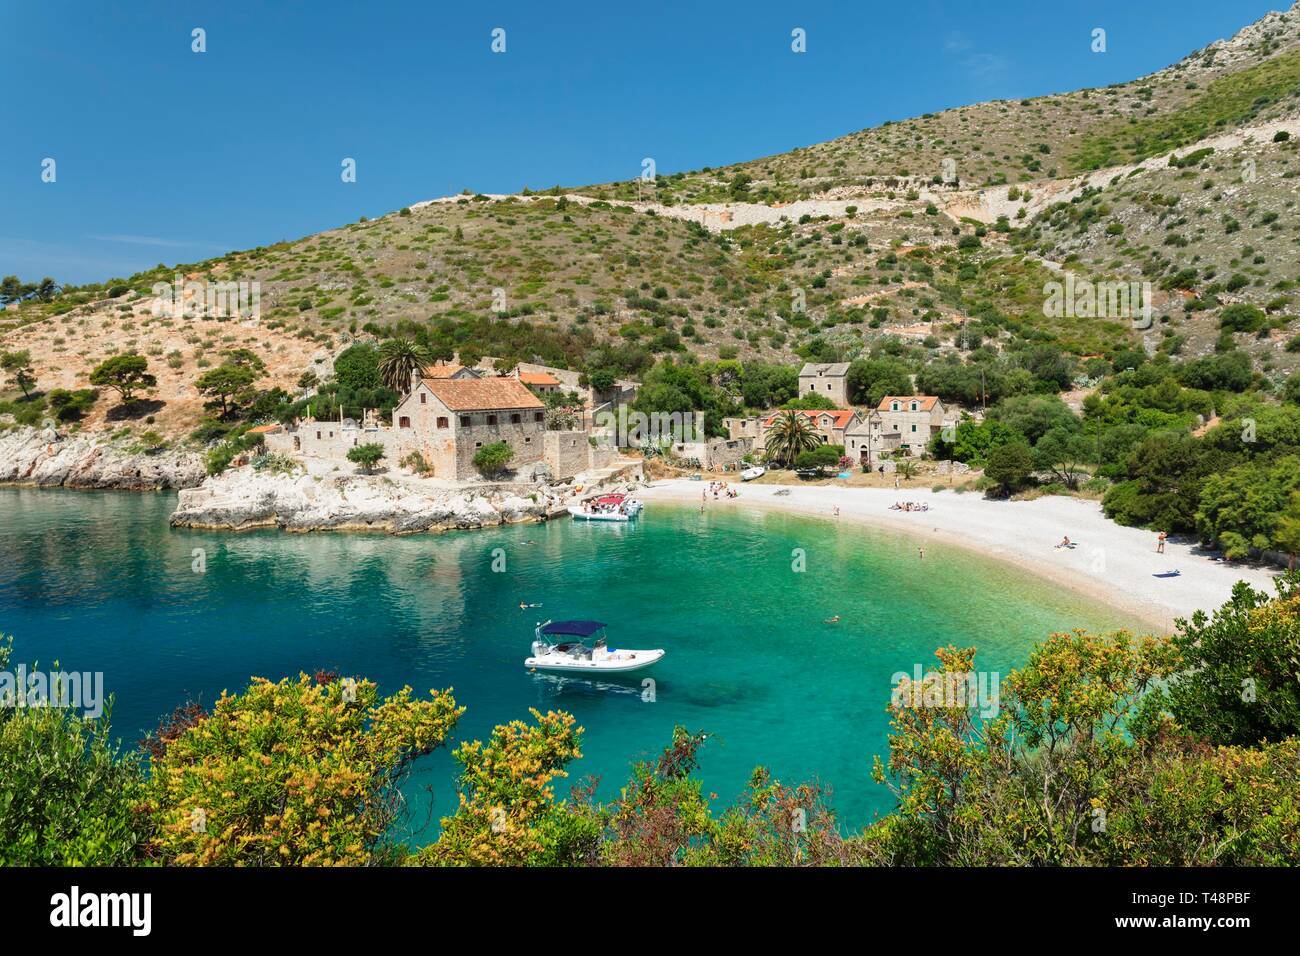 Dubovica bay, turquoise water and beach, island of Hvar, Adriatic Sea, Dalmatia, Croatia Stock Photo